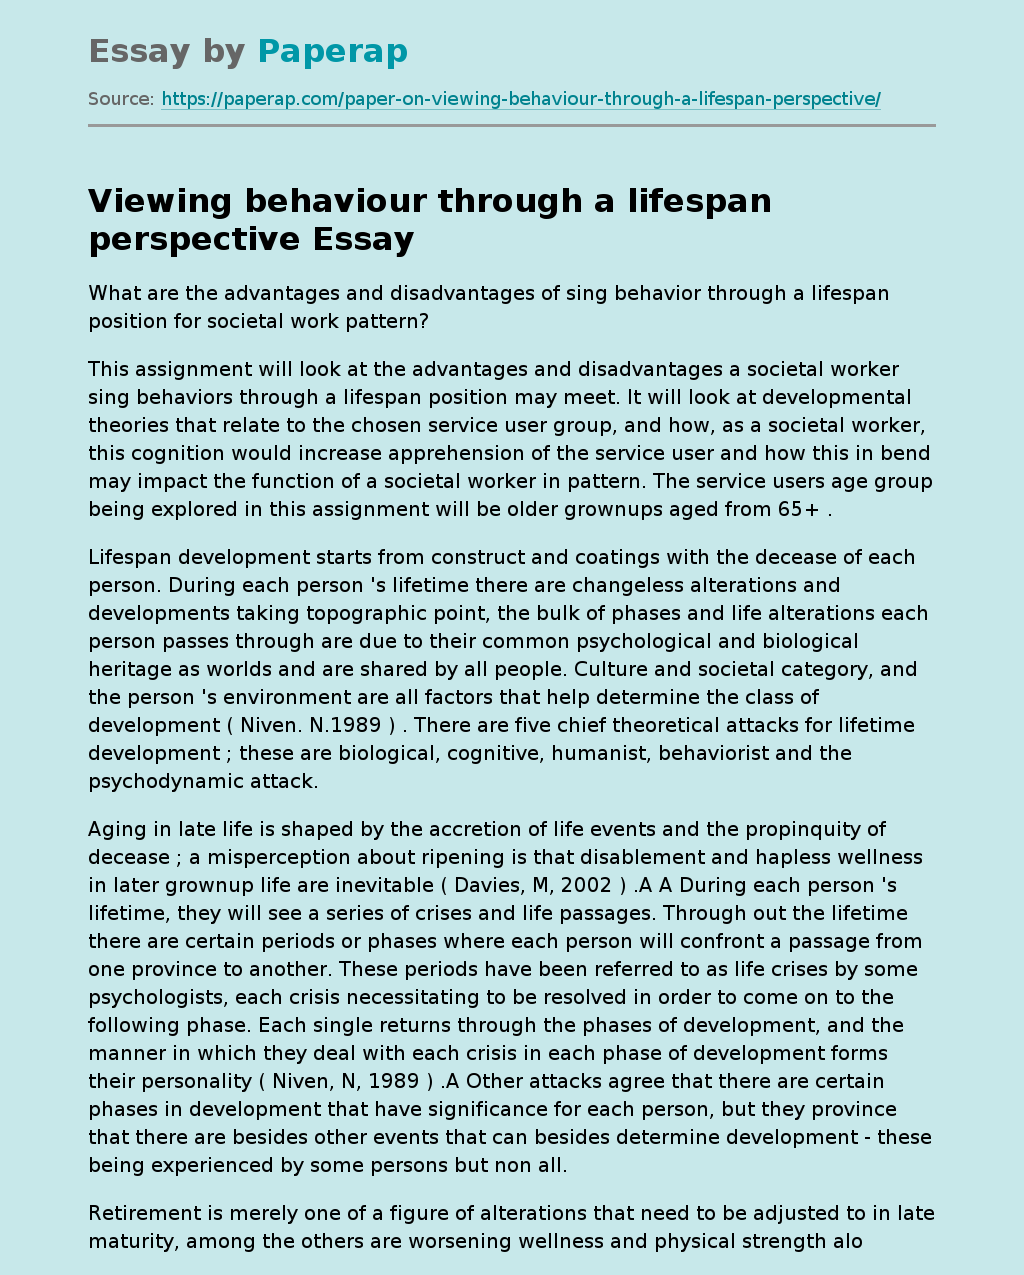 Viewing behaviour through a lifespan perspective